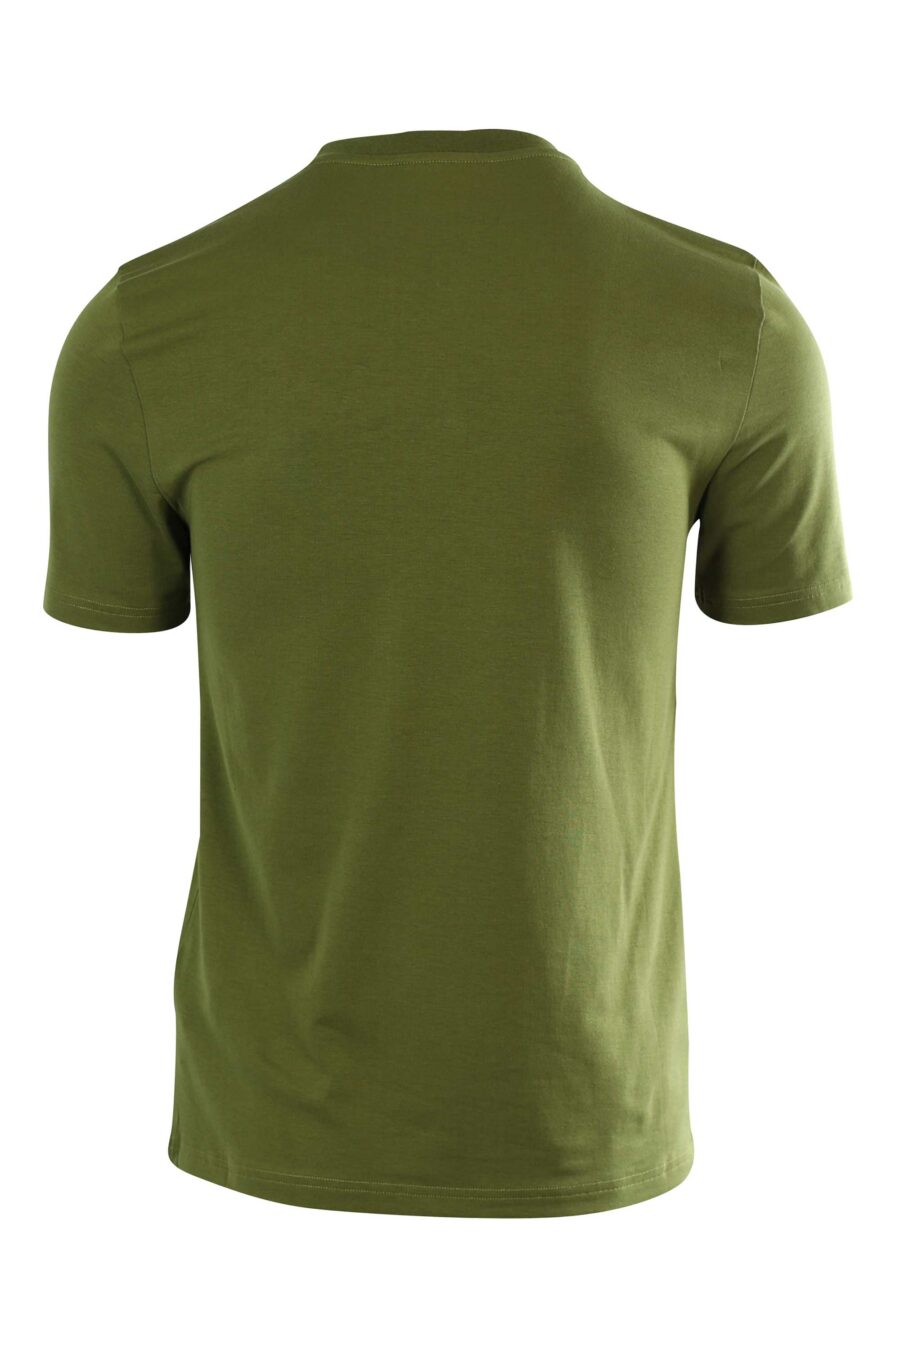 Camiseta verde militar con maxilogo negro - 889316169805 2